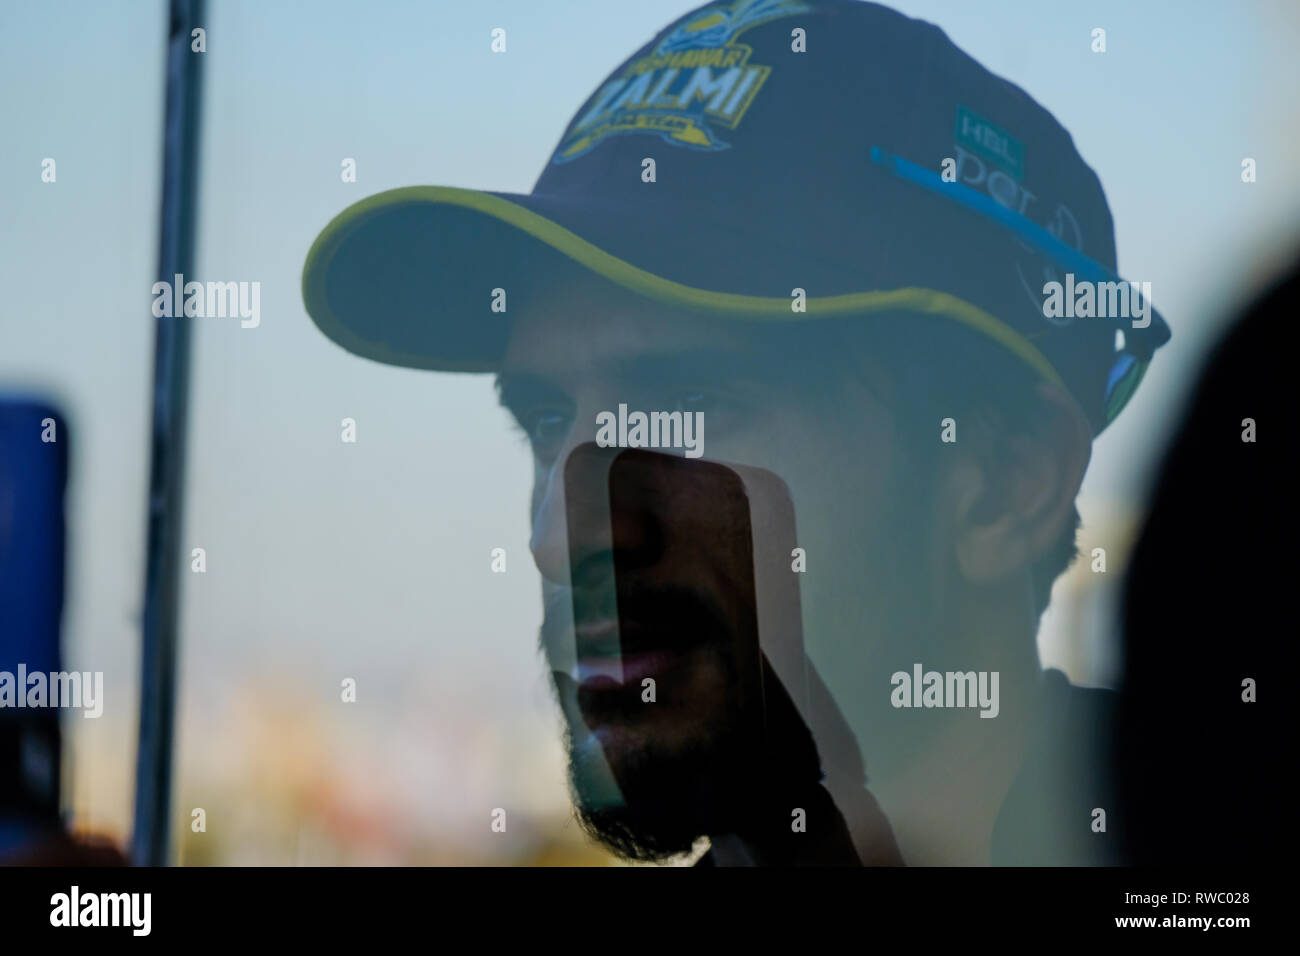 Abu Dhabi, UAE. 5th Mar 2019. Pakistan Super League 2019/ PSL Fans taking selfies with Cricket Star Hasan ALi at Sheikh Zayed Cricket Stadium Abu Dhabi. Credit: Fahd Khan/Alamy Live News Stock Photo